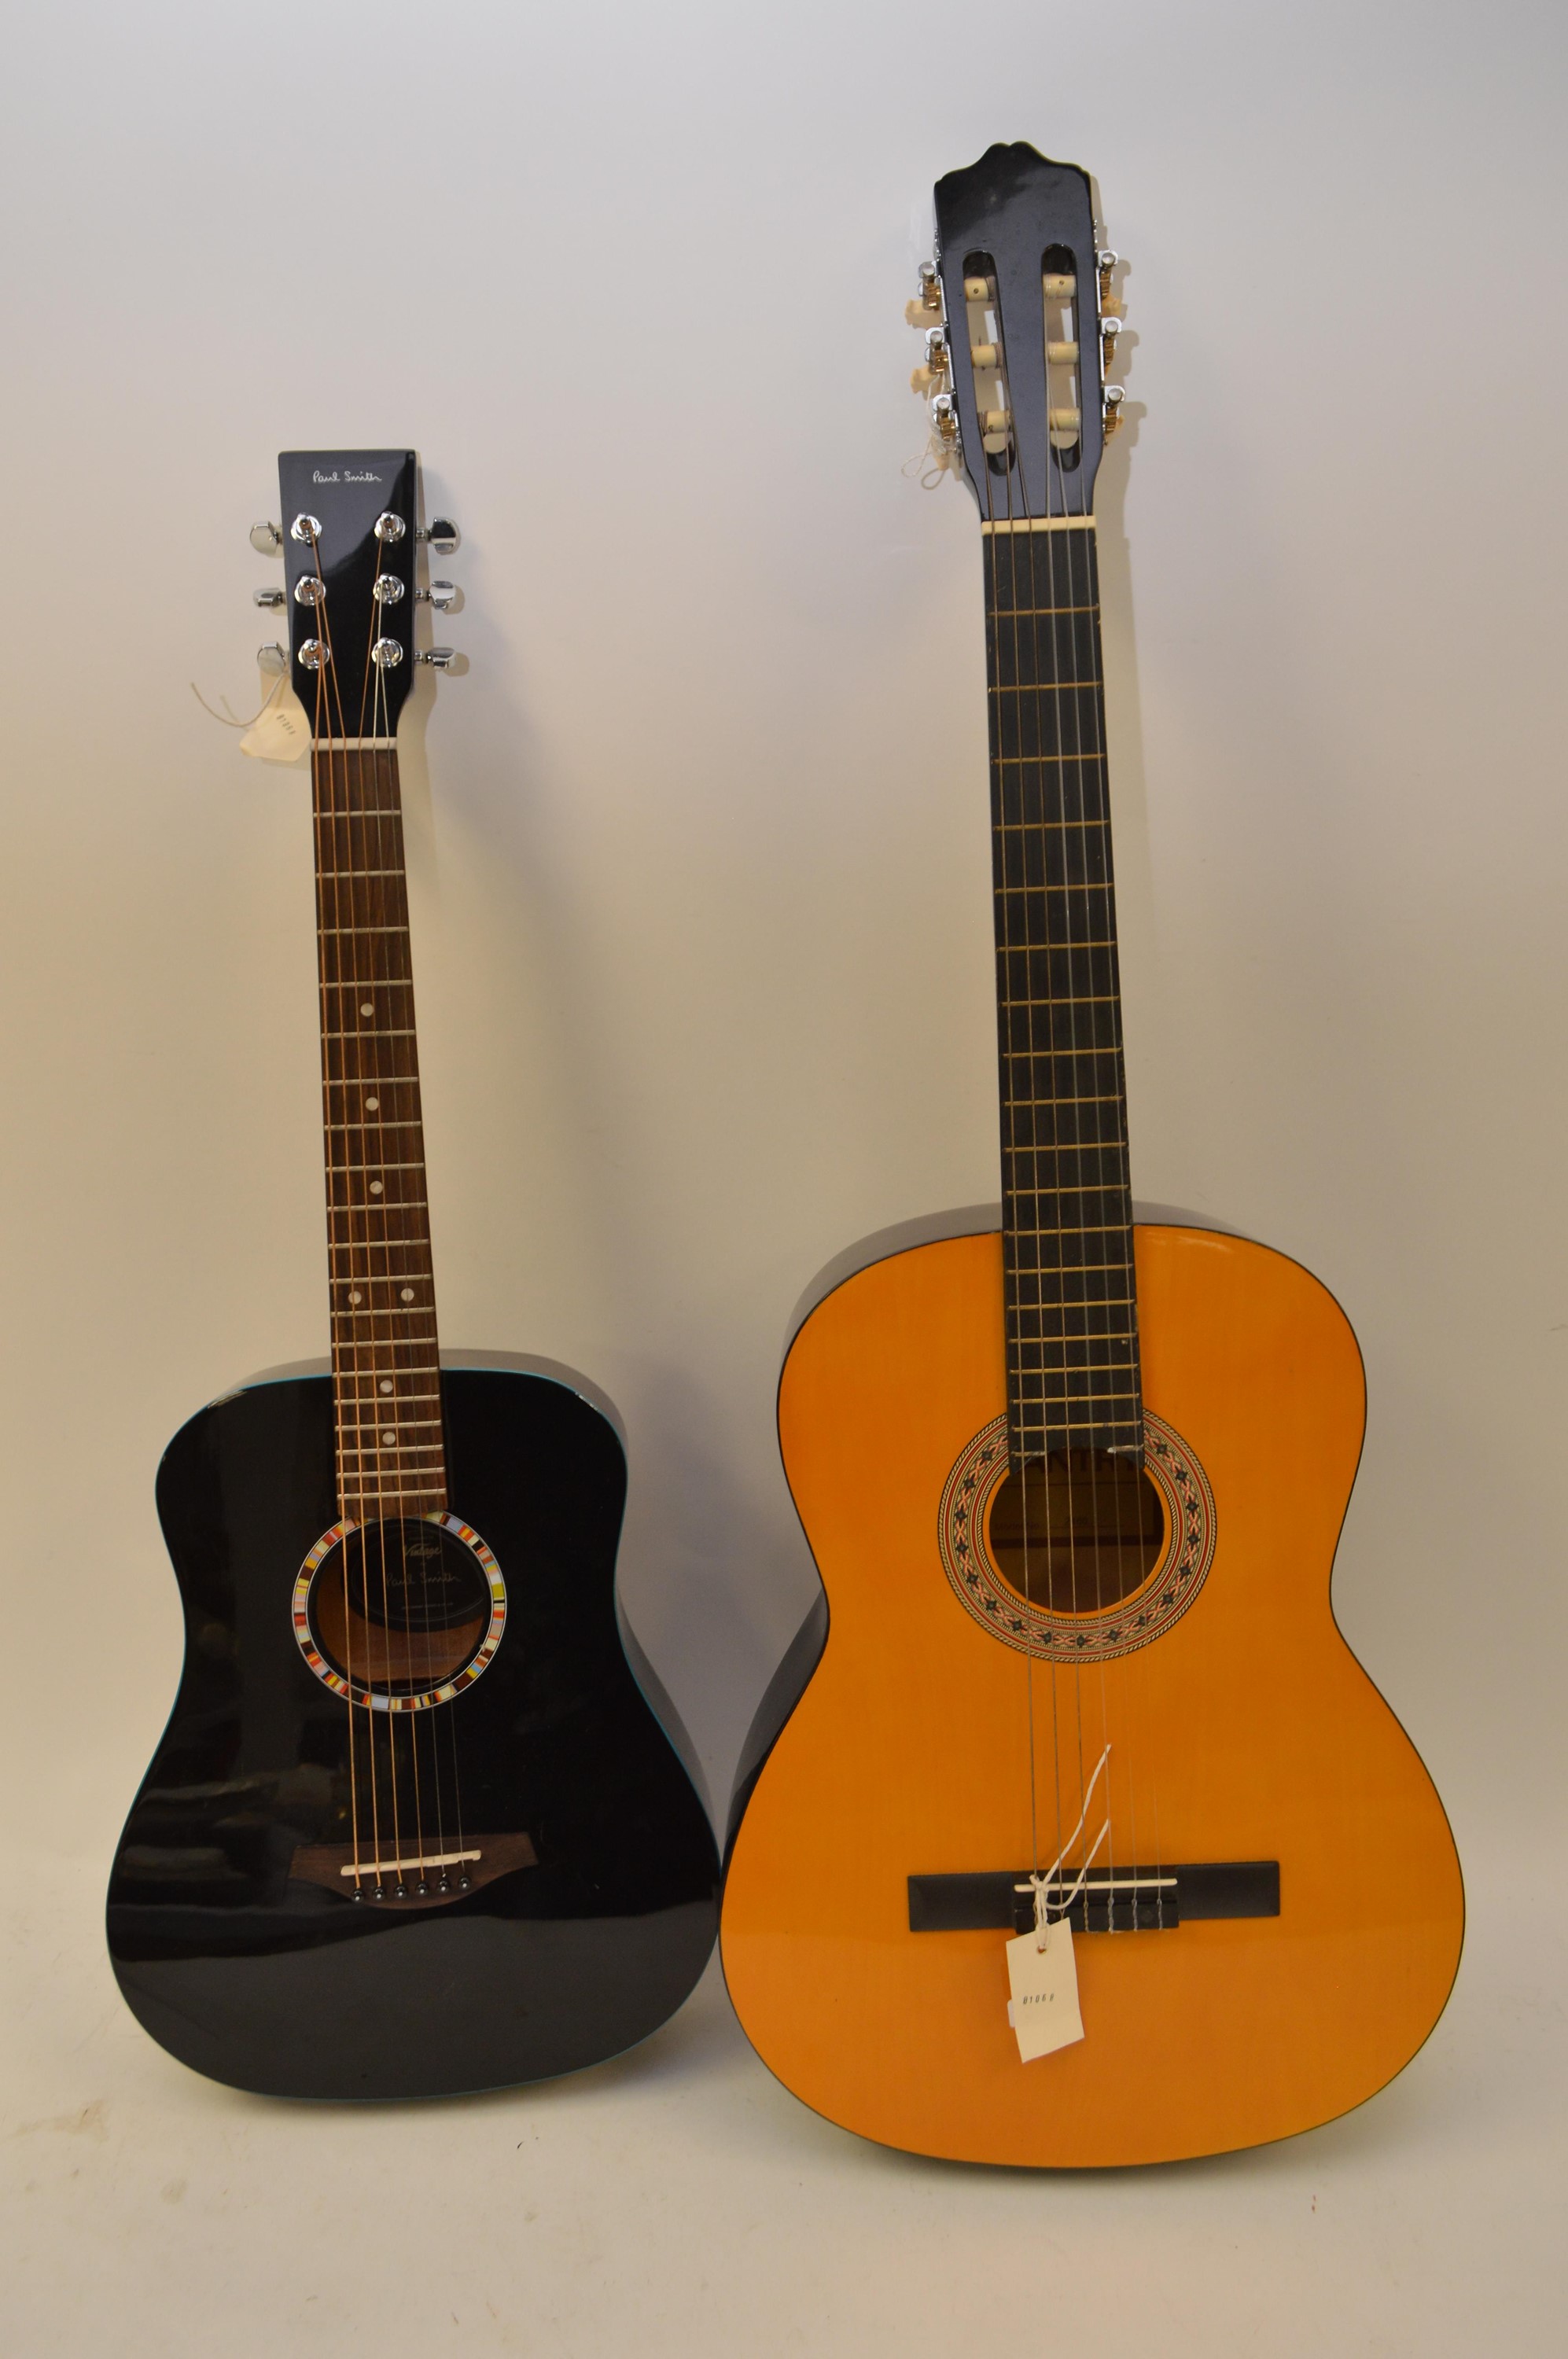 Two guitars.